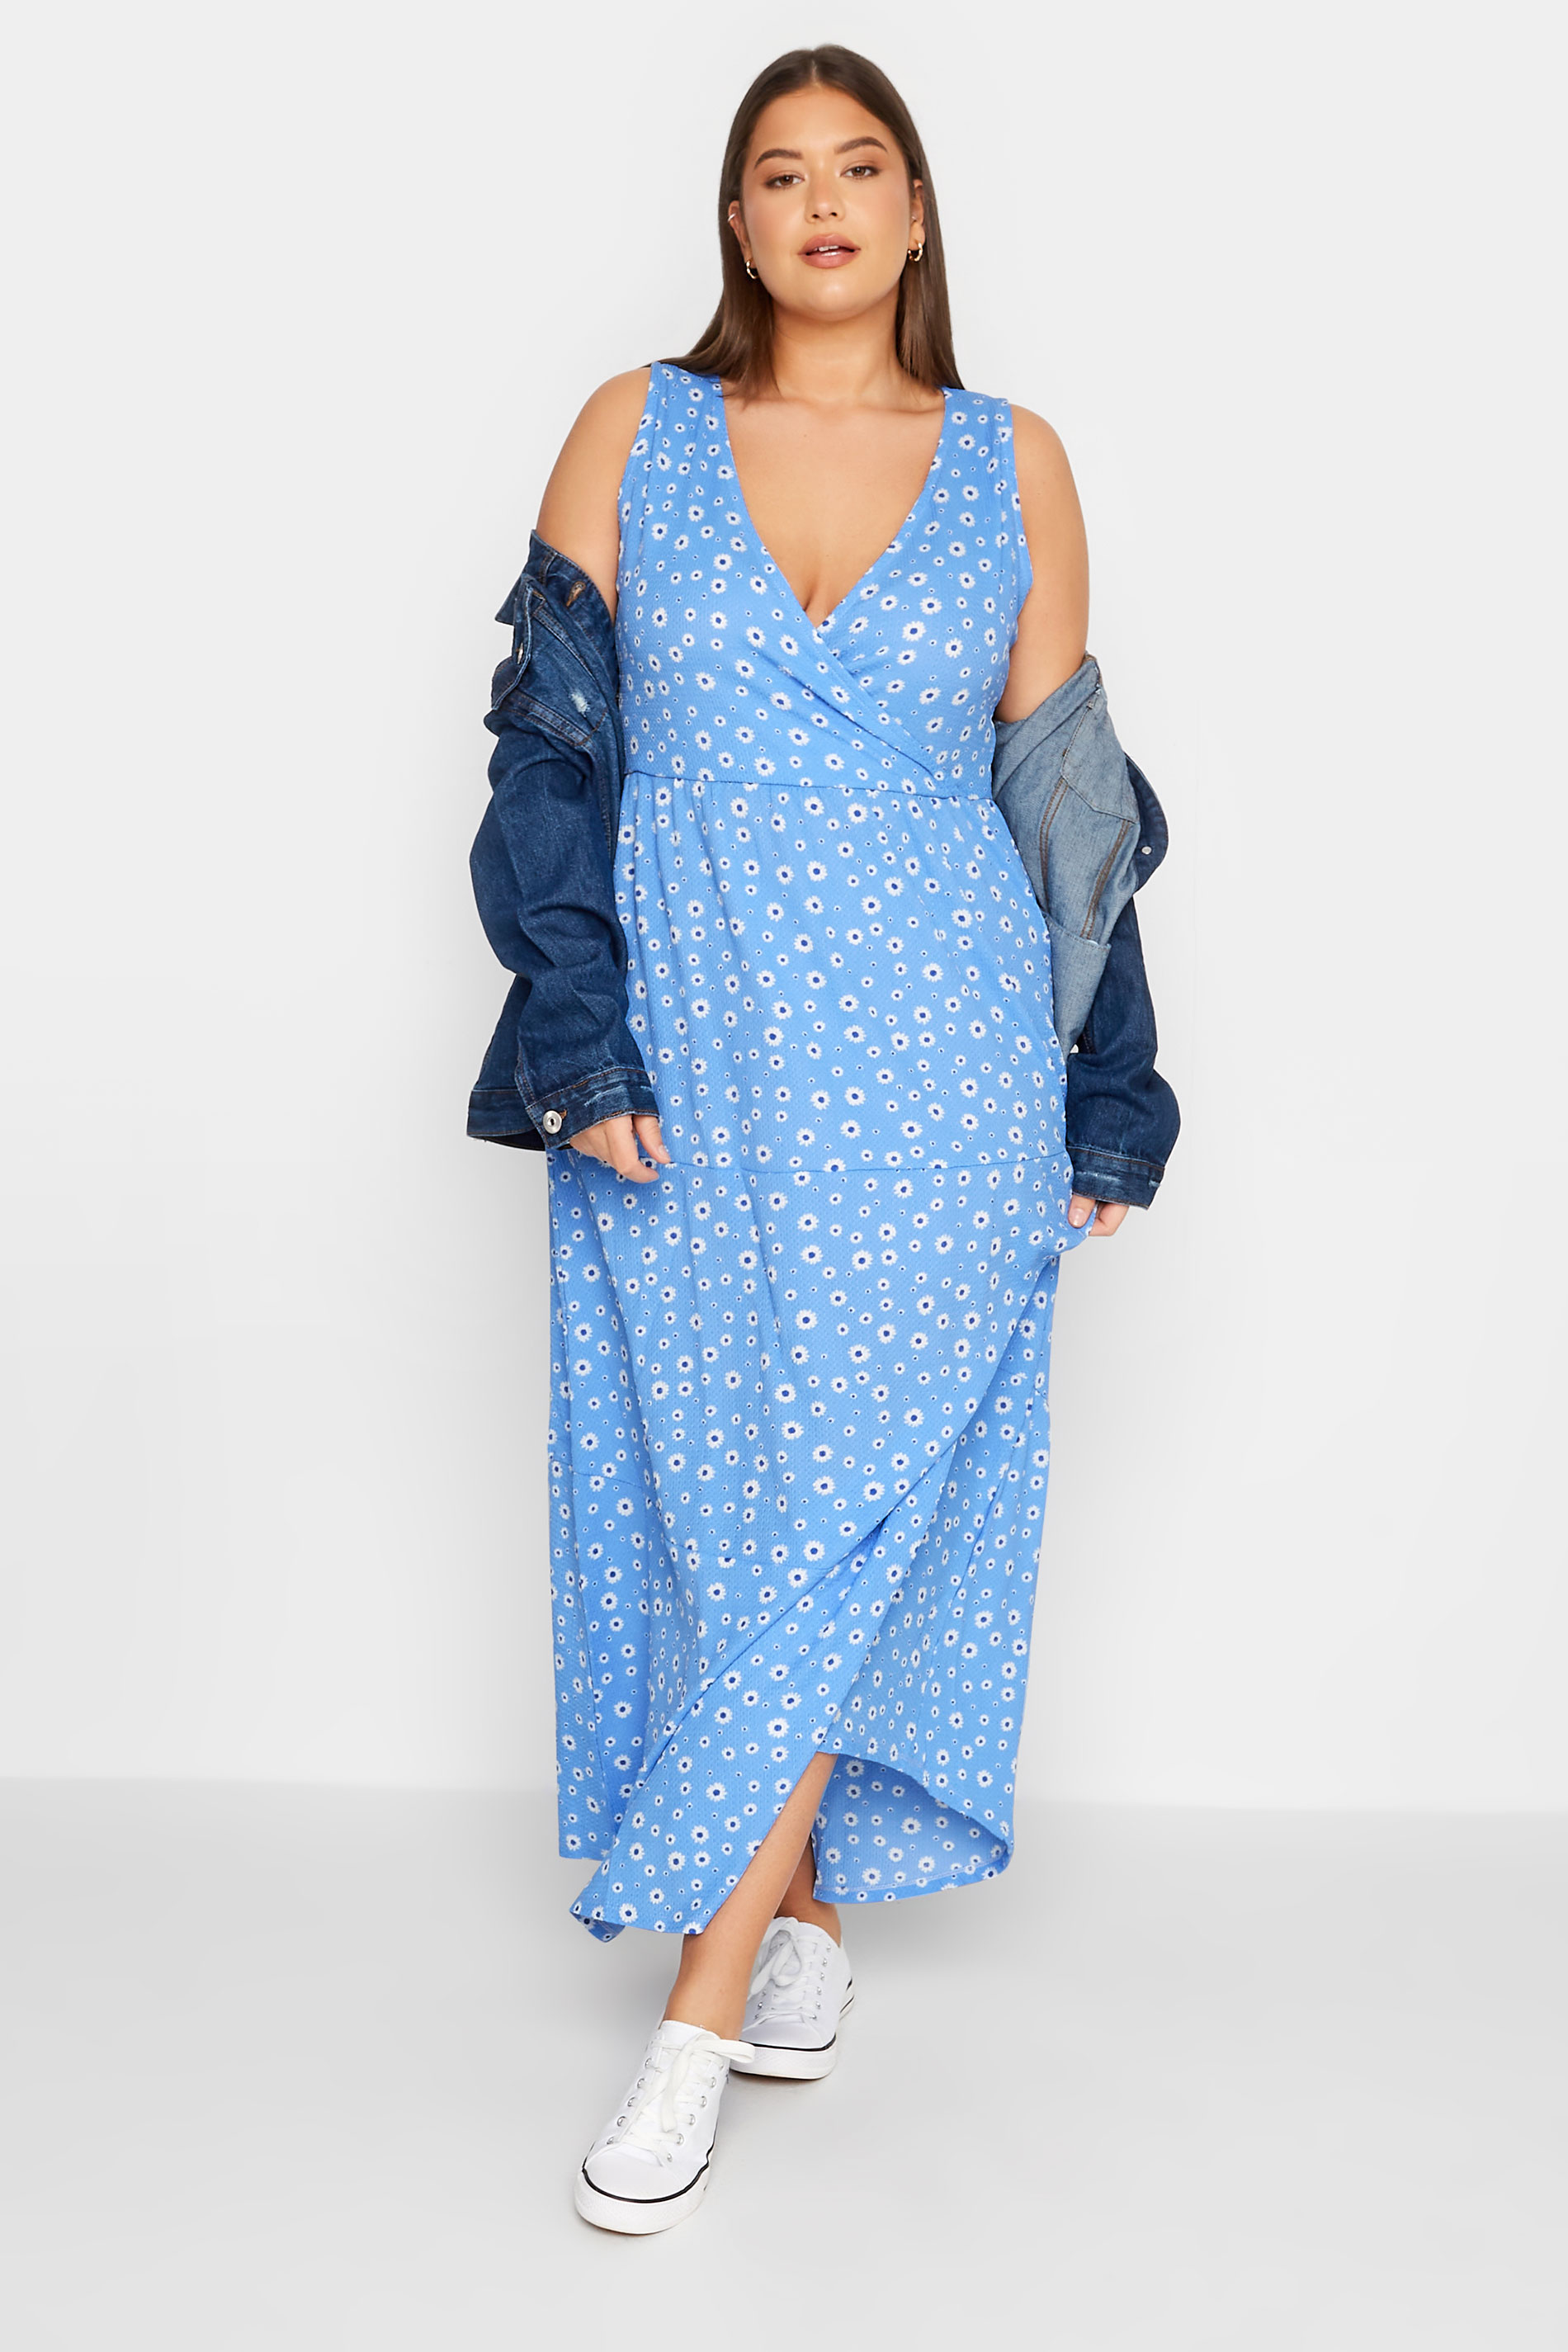 LTS Tall Women's Blue Daisy Print Maxi Dress | Long Tall Sally 2